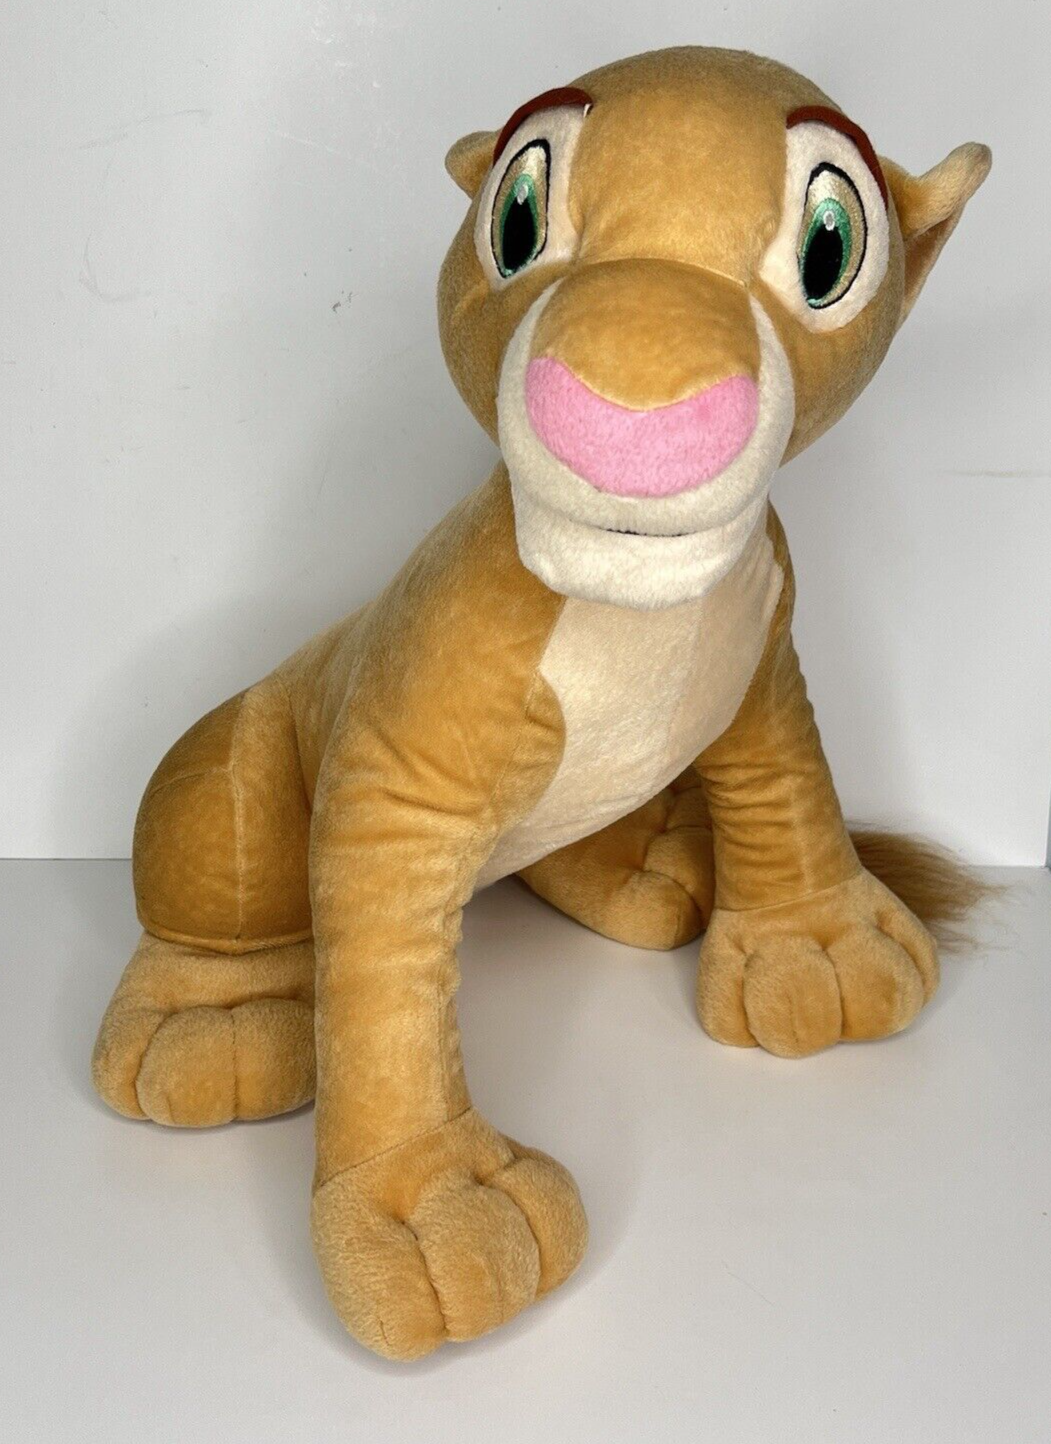 NALA Plush The Lion King Vintage Disney Hasbro Stuffed Animal 2002 Large 20" - $38.52